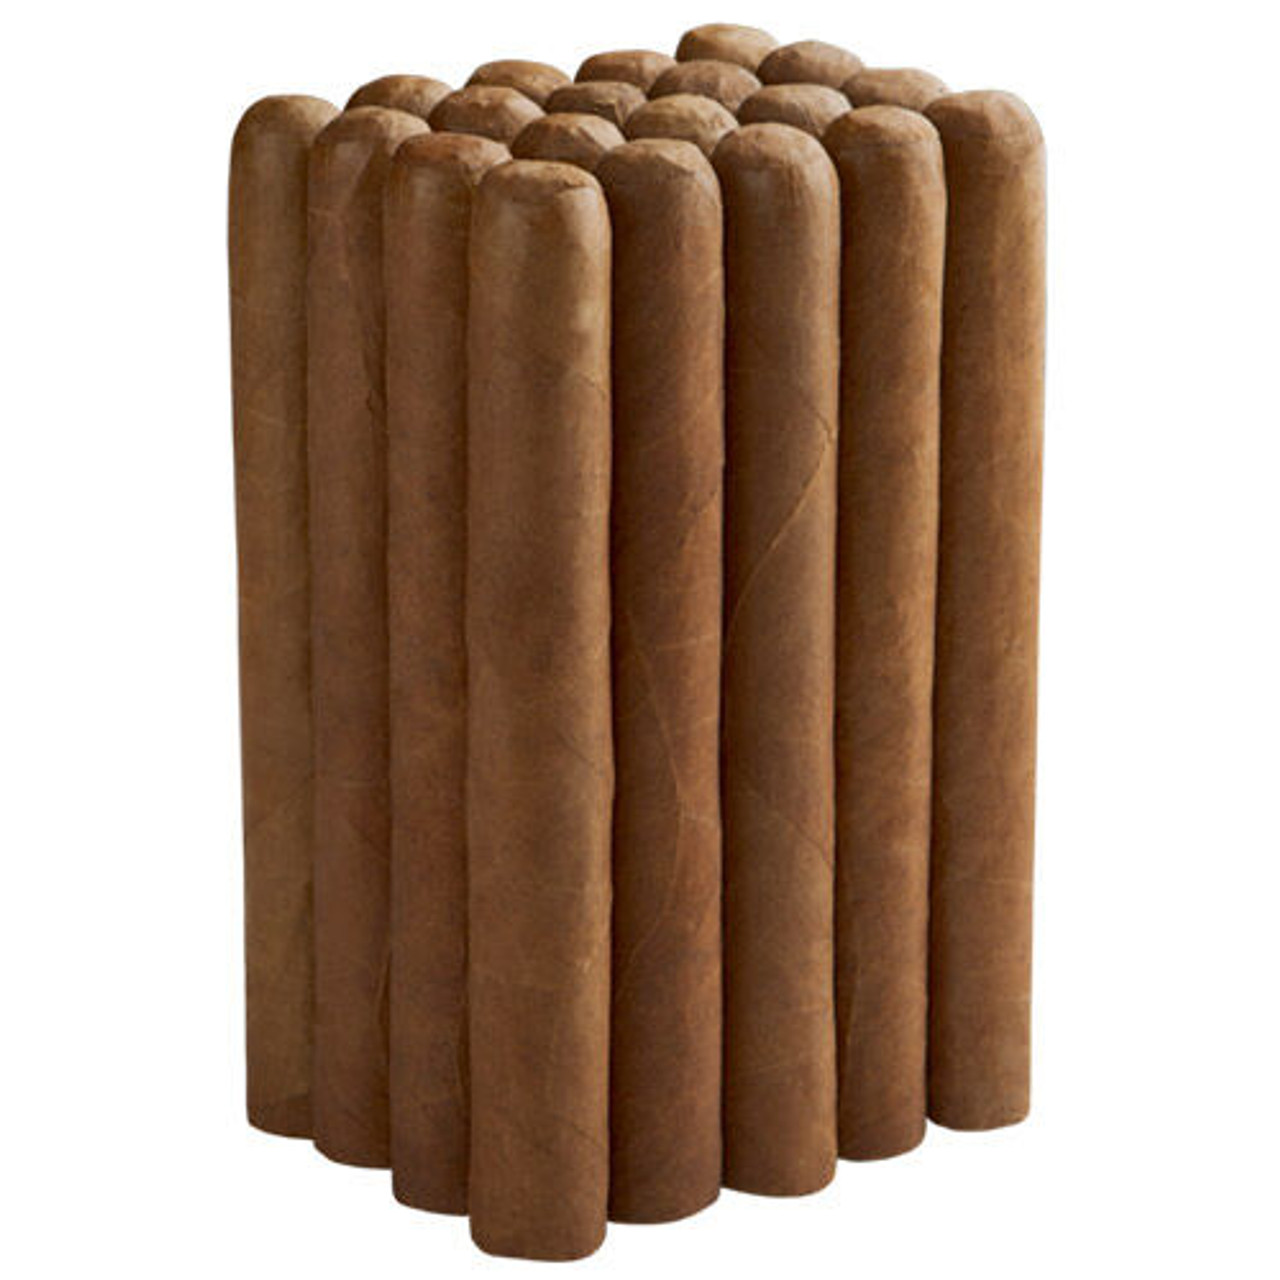 Nicaraguan Overruns Habano 70 Cigars - 7 x 70 (Bundle of 20)